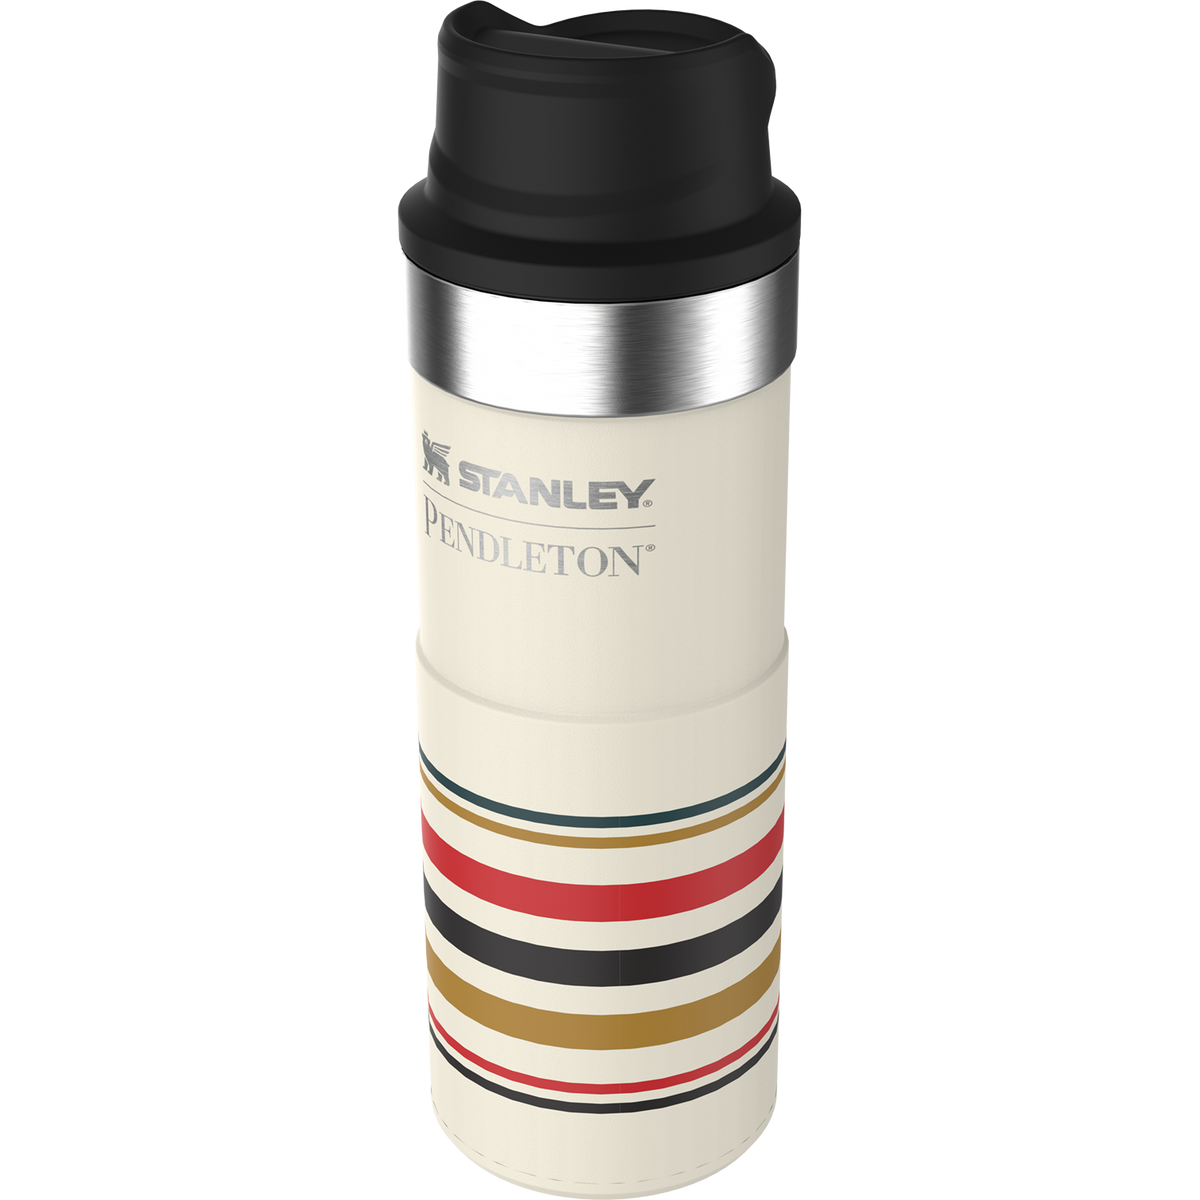 Stanley X Pendleton Multi-National Park Stripes Trigger-Action Travel Mug 0.47L